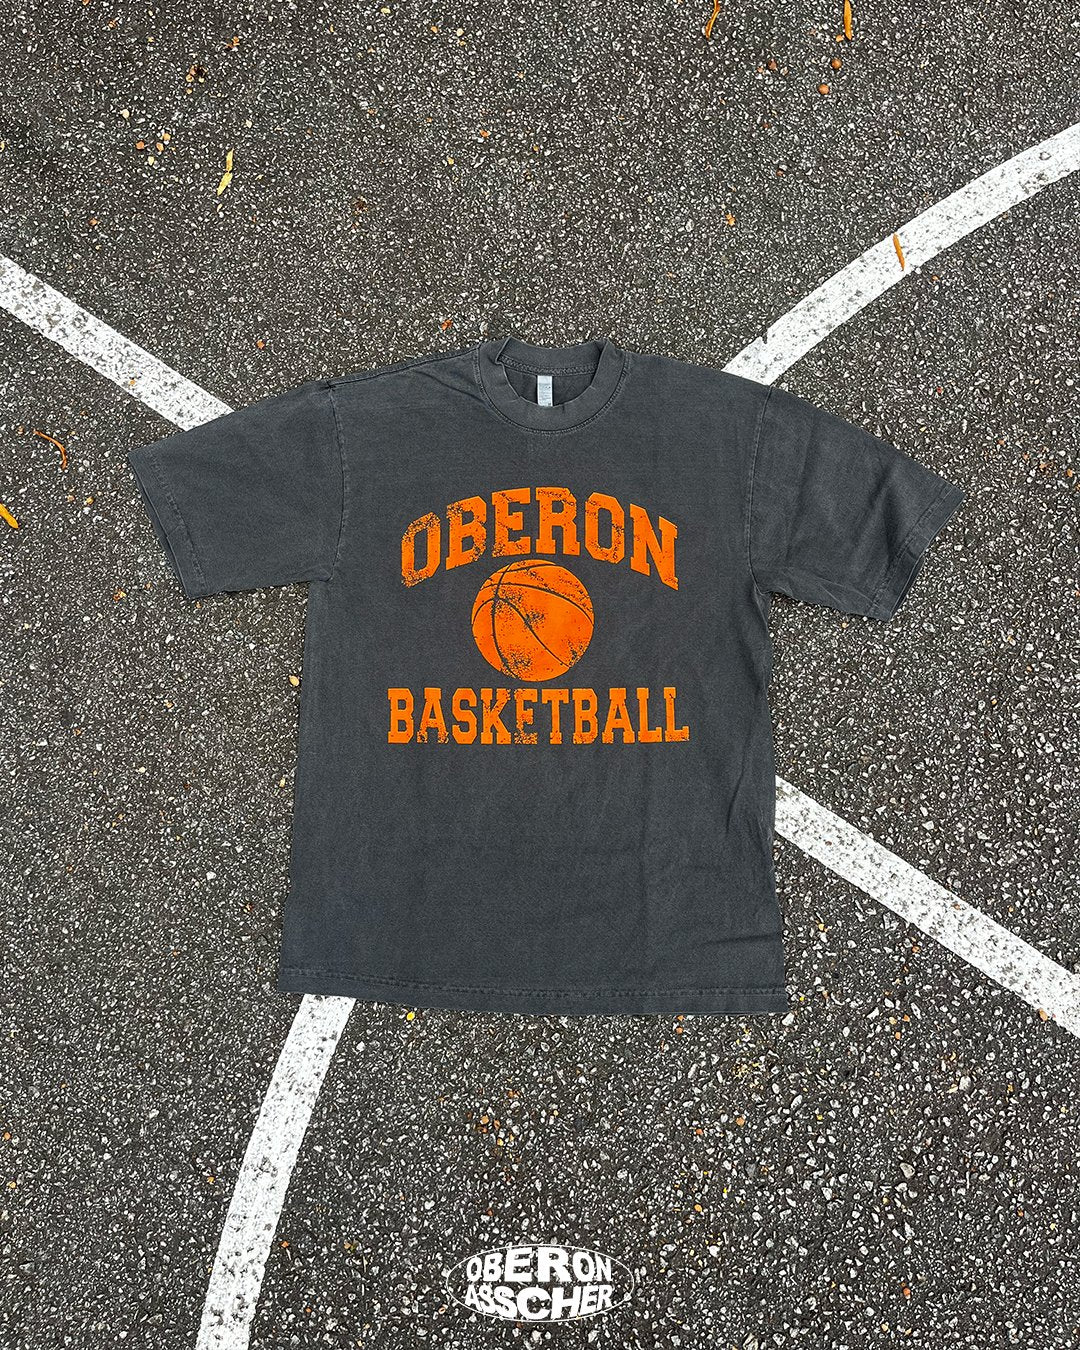 Oberon Basketball Tee - Oberon Asscher